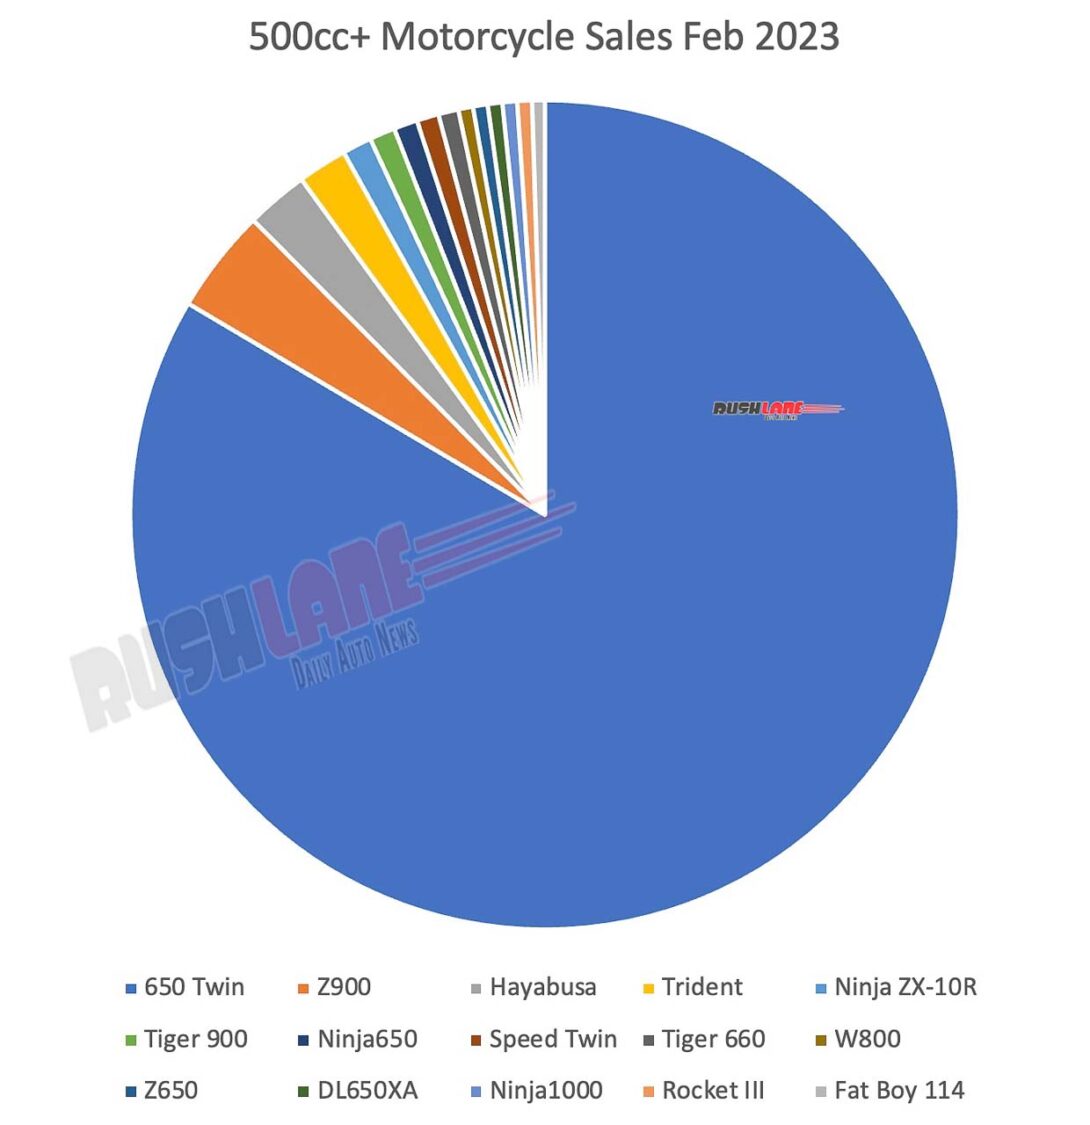 Motocycle Sales 50cc+ Share % Feb 2023